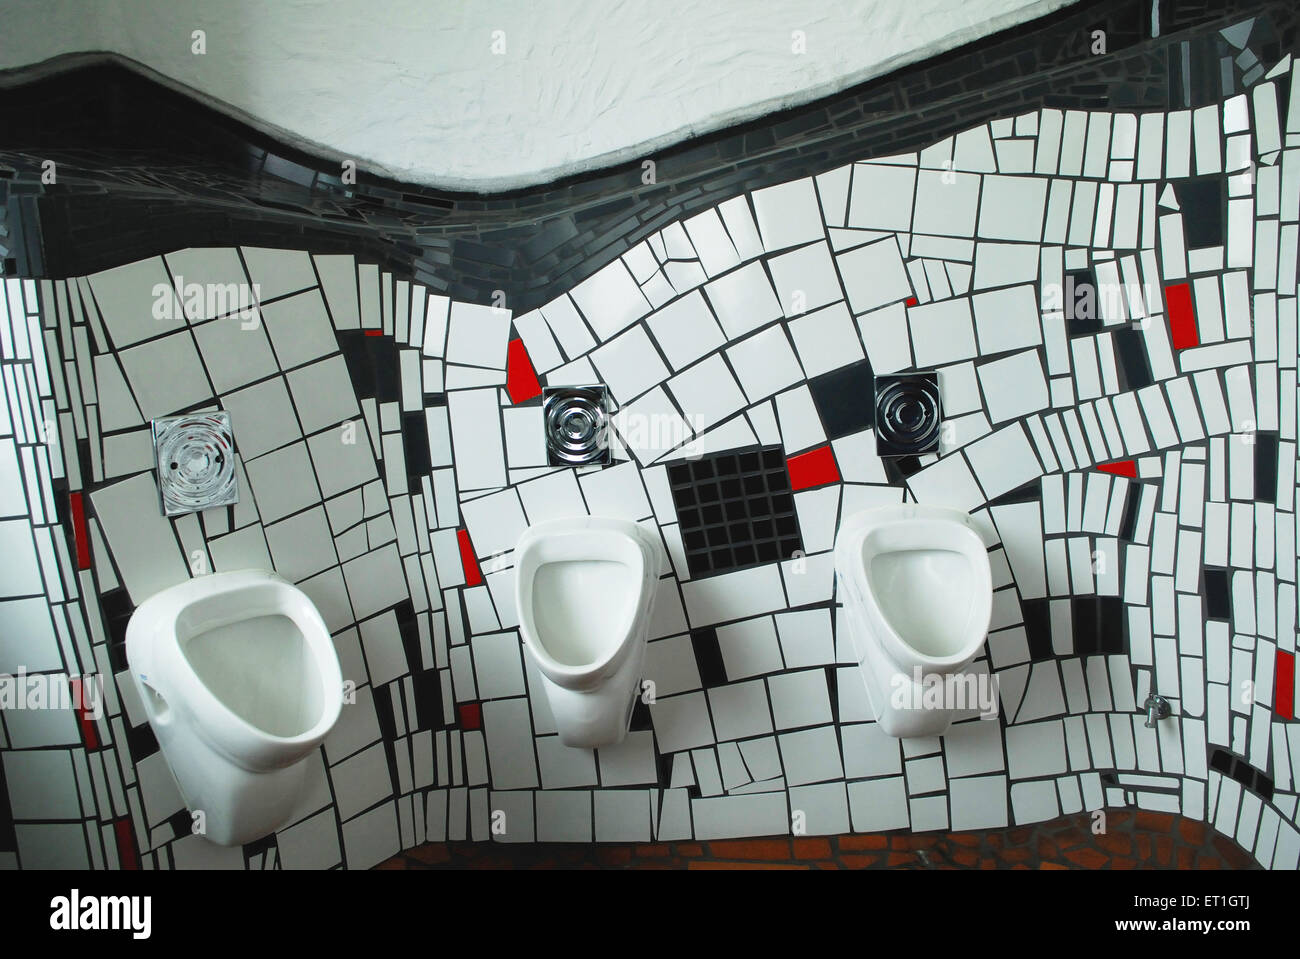 Designer toilet urinal, Berlin, Germany, German, Europe, European Stock Photo